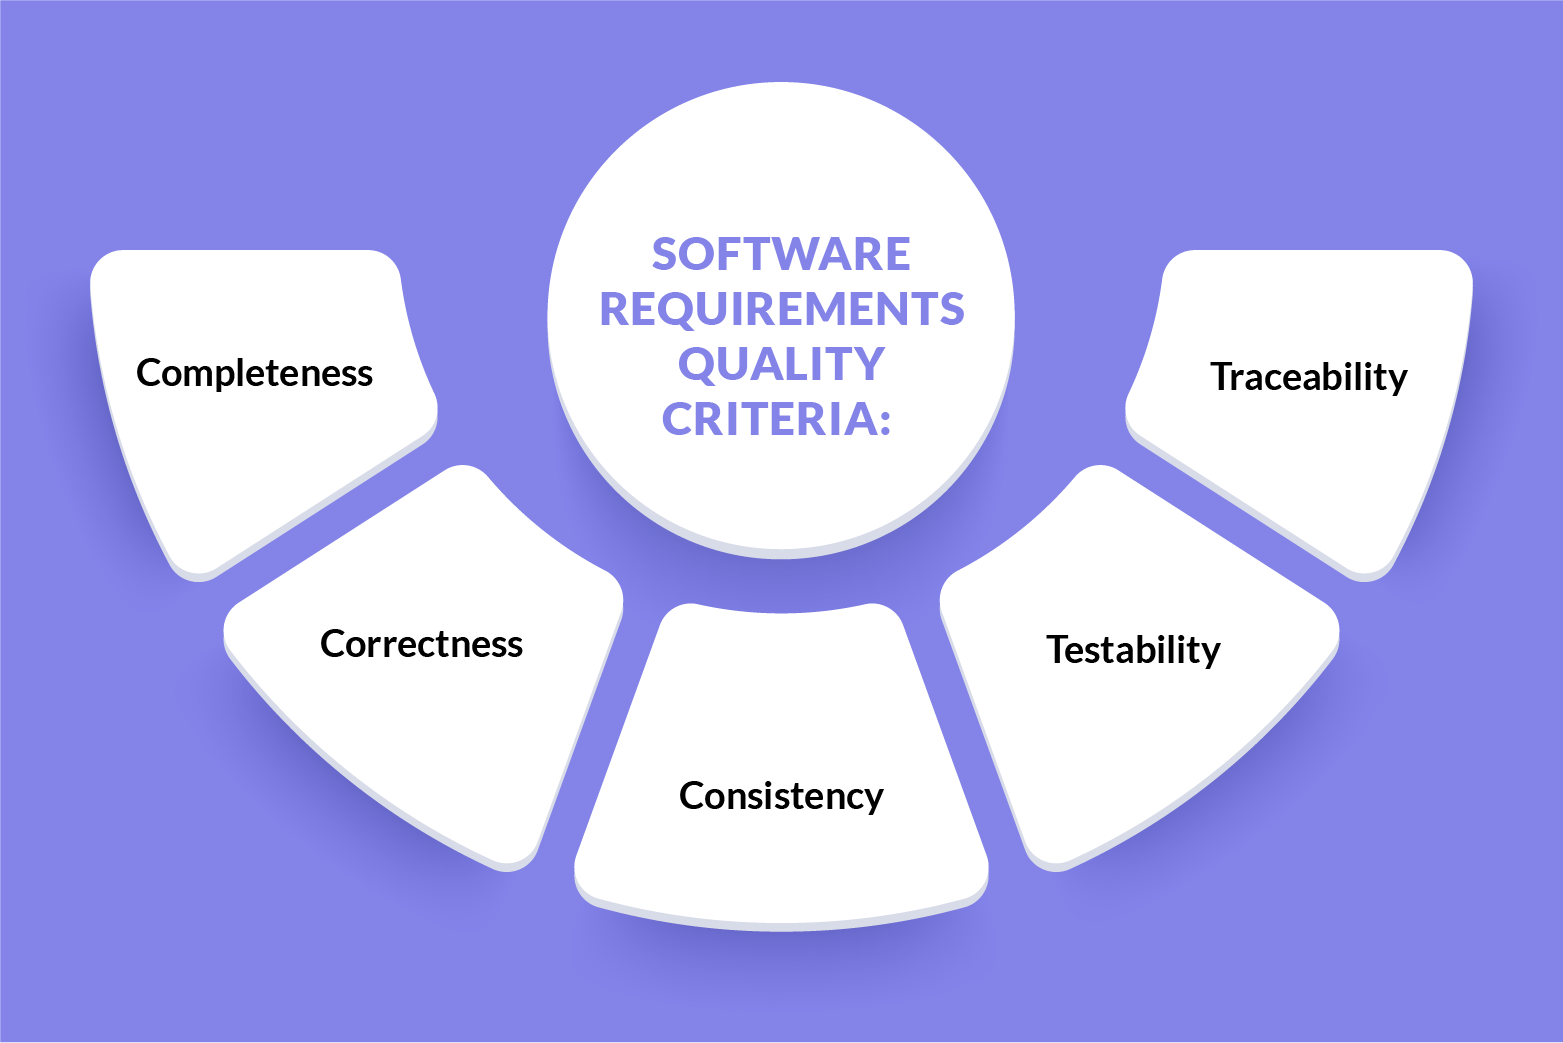 Software requirements criteria